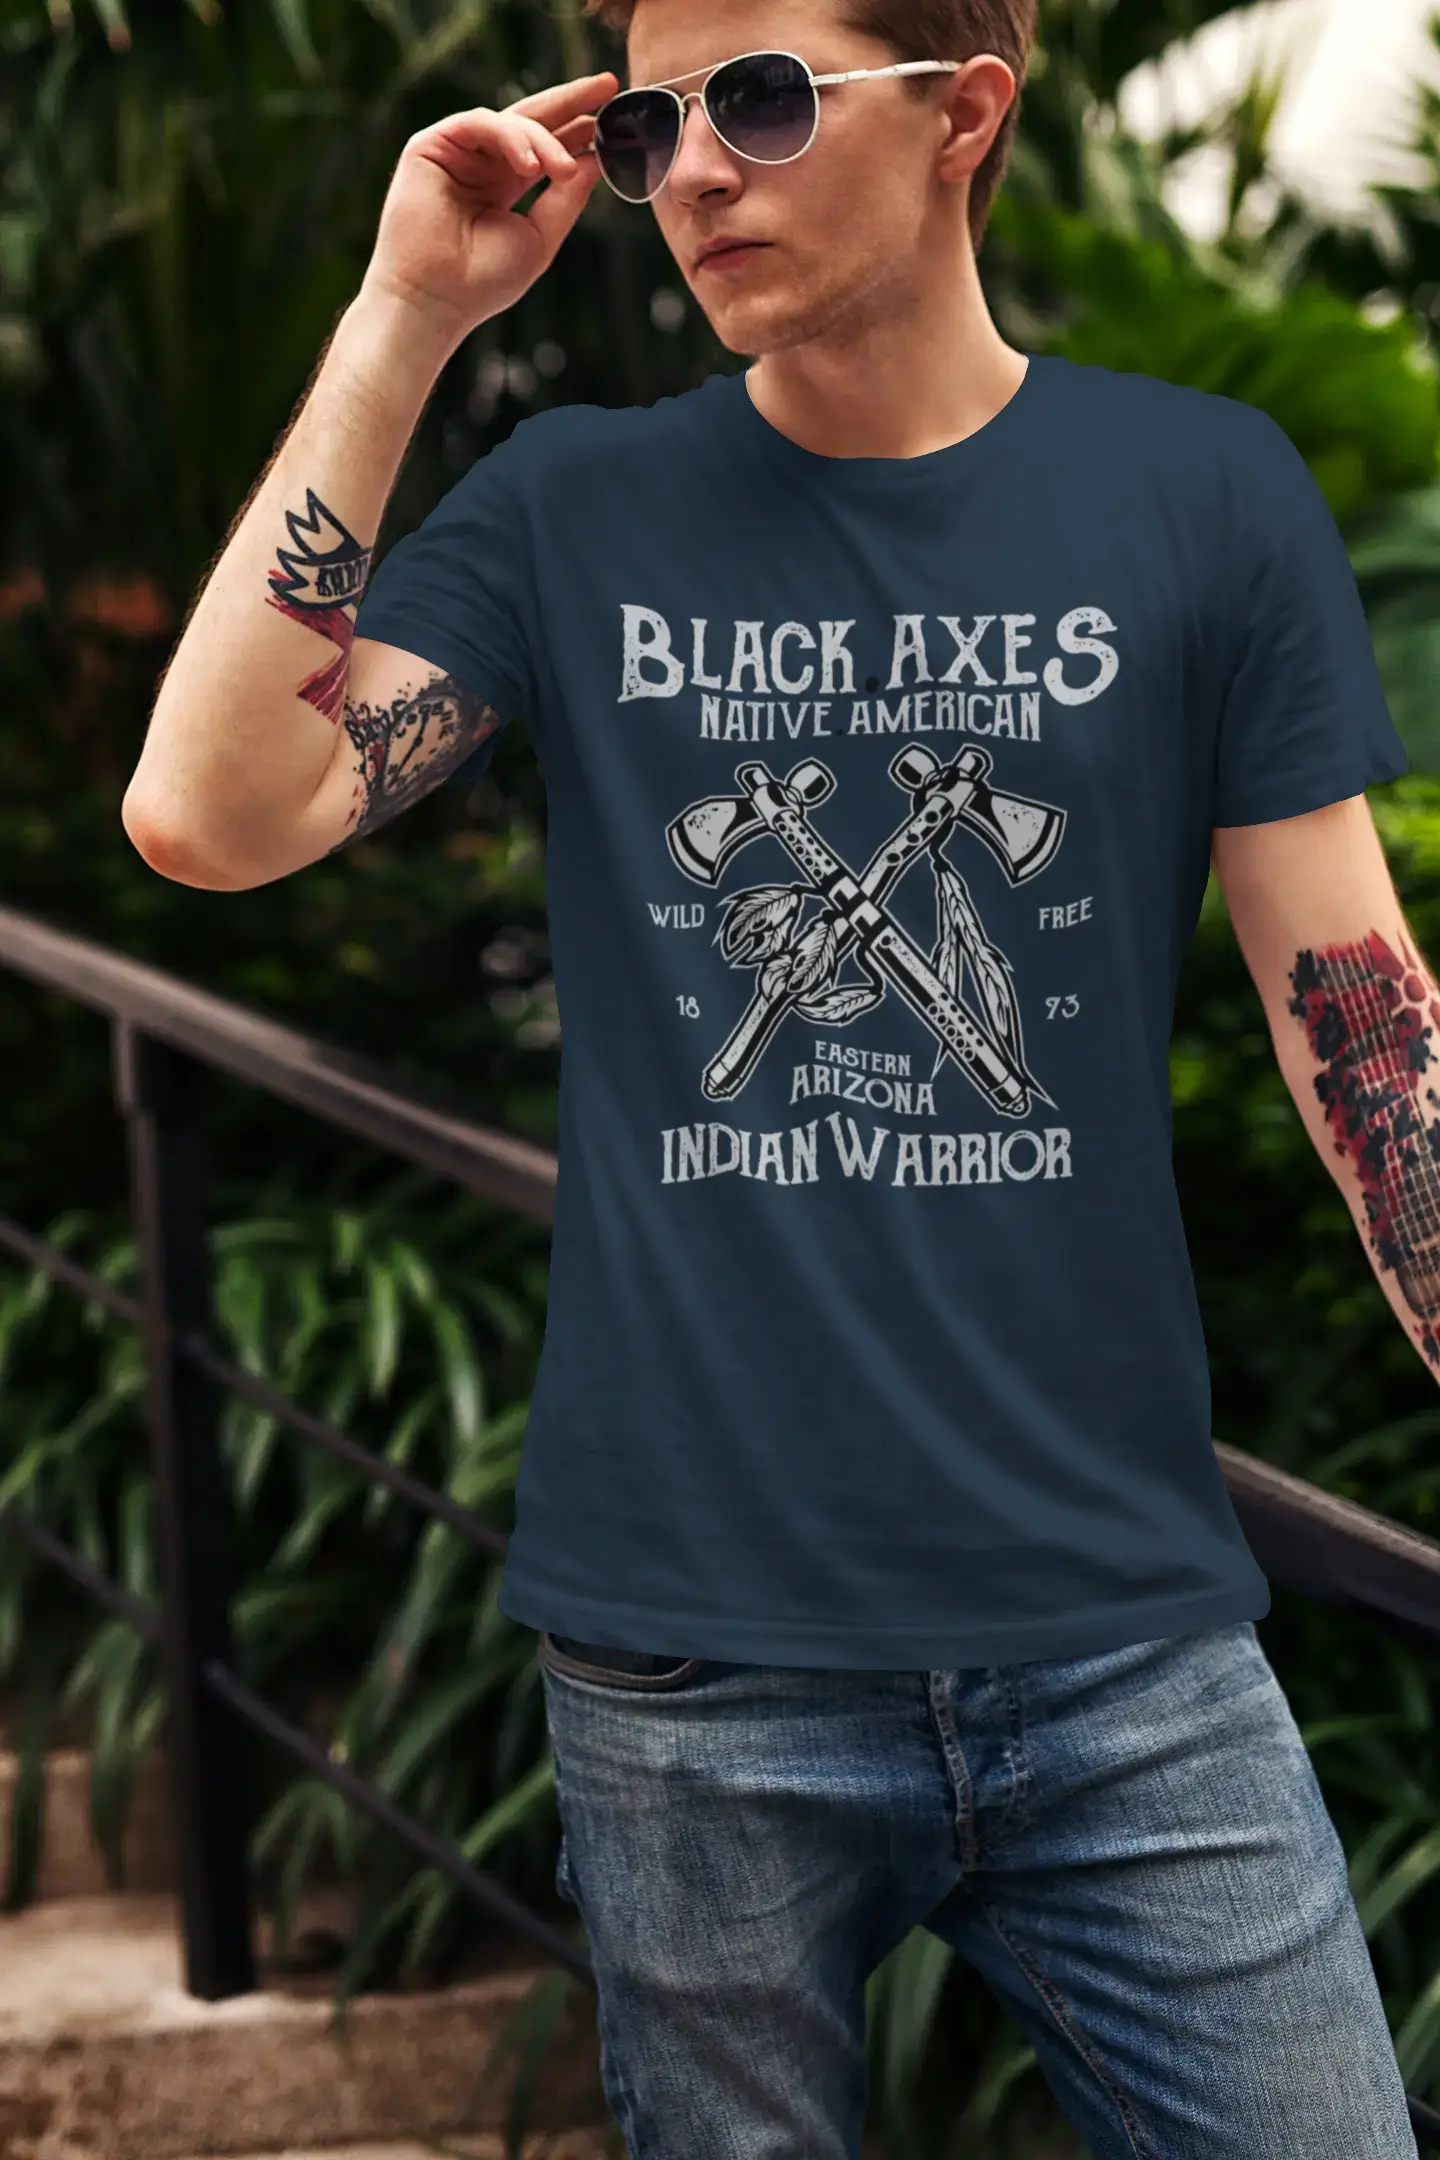 ULTRABASIC Herren T-Shirt Native American Black Axes – Indian Warrior Shirt für Männer